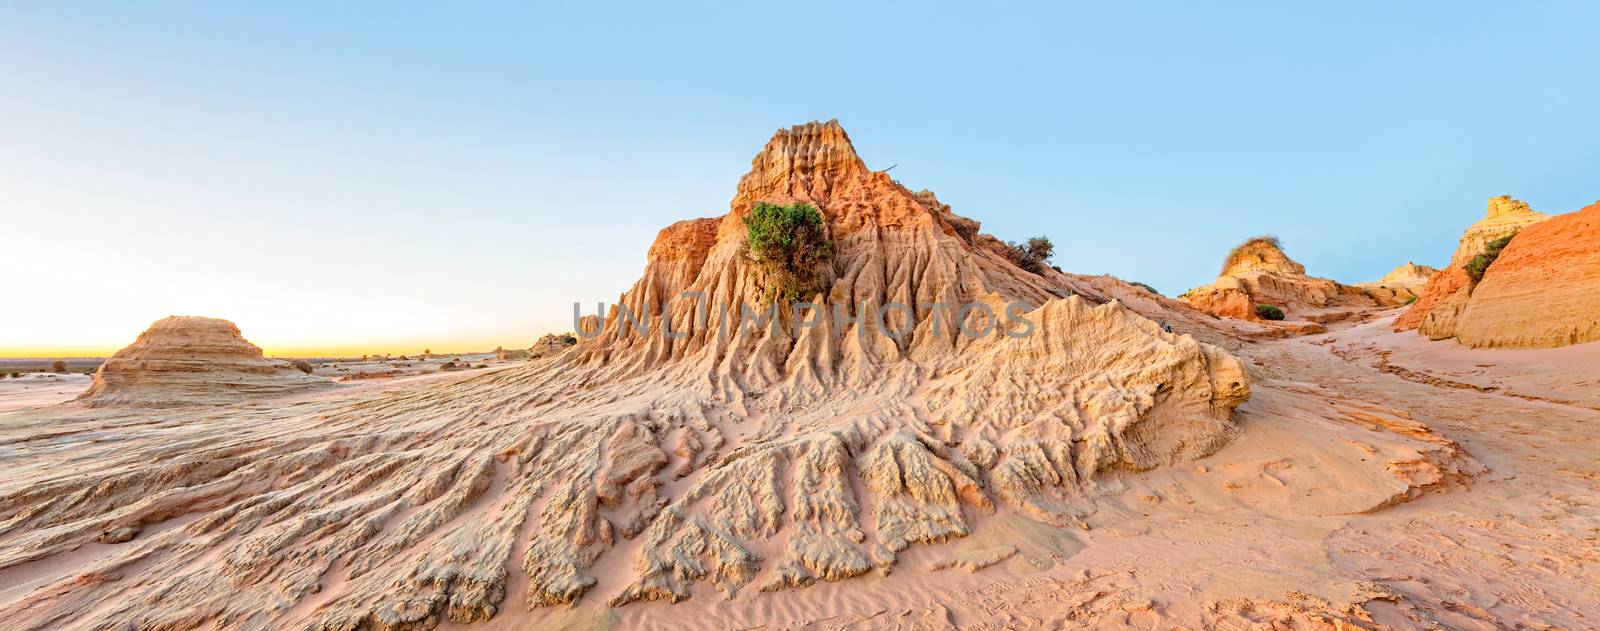 Desert landforms scenic panorama by lovleah